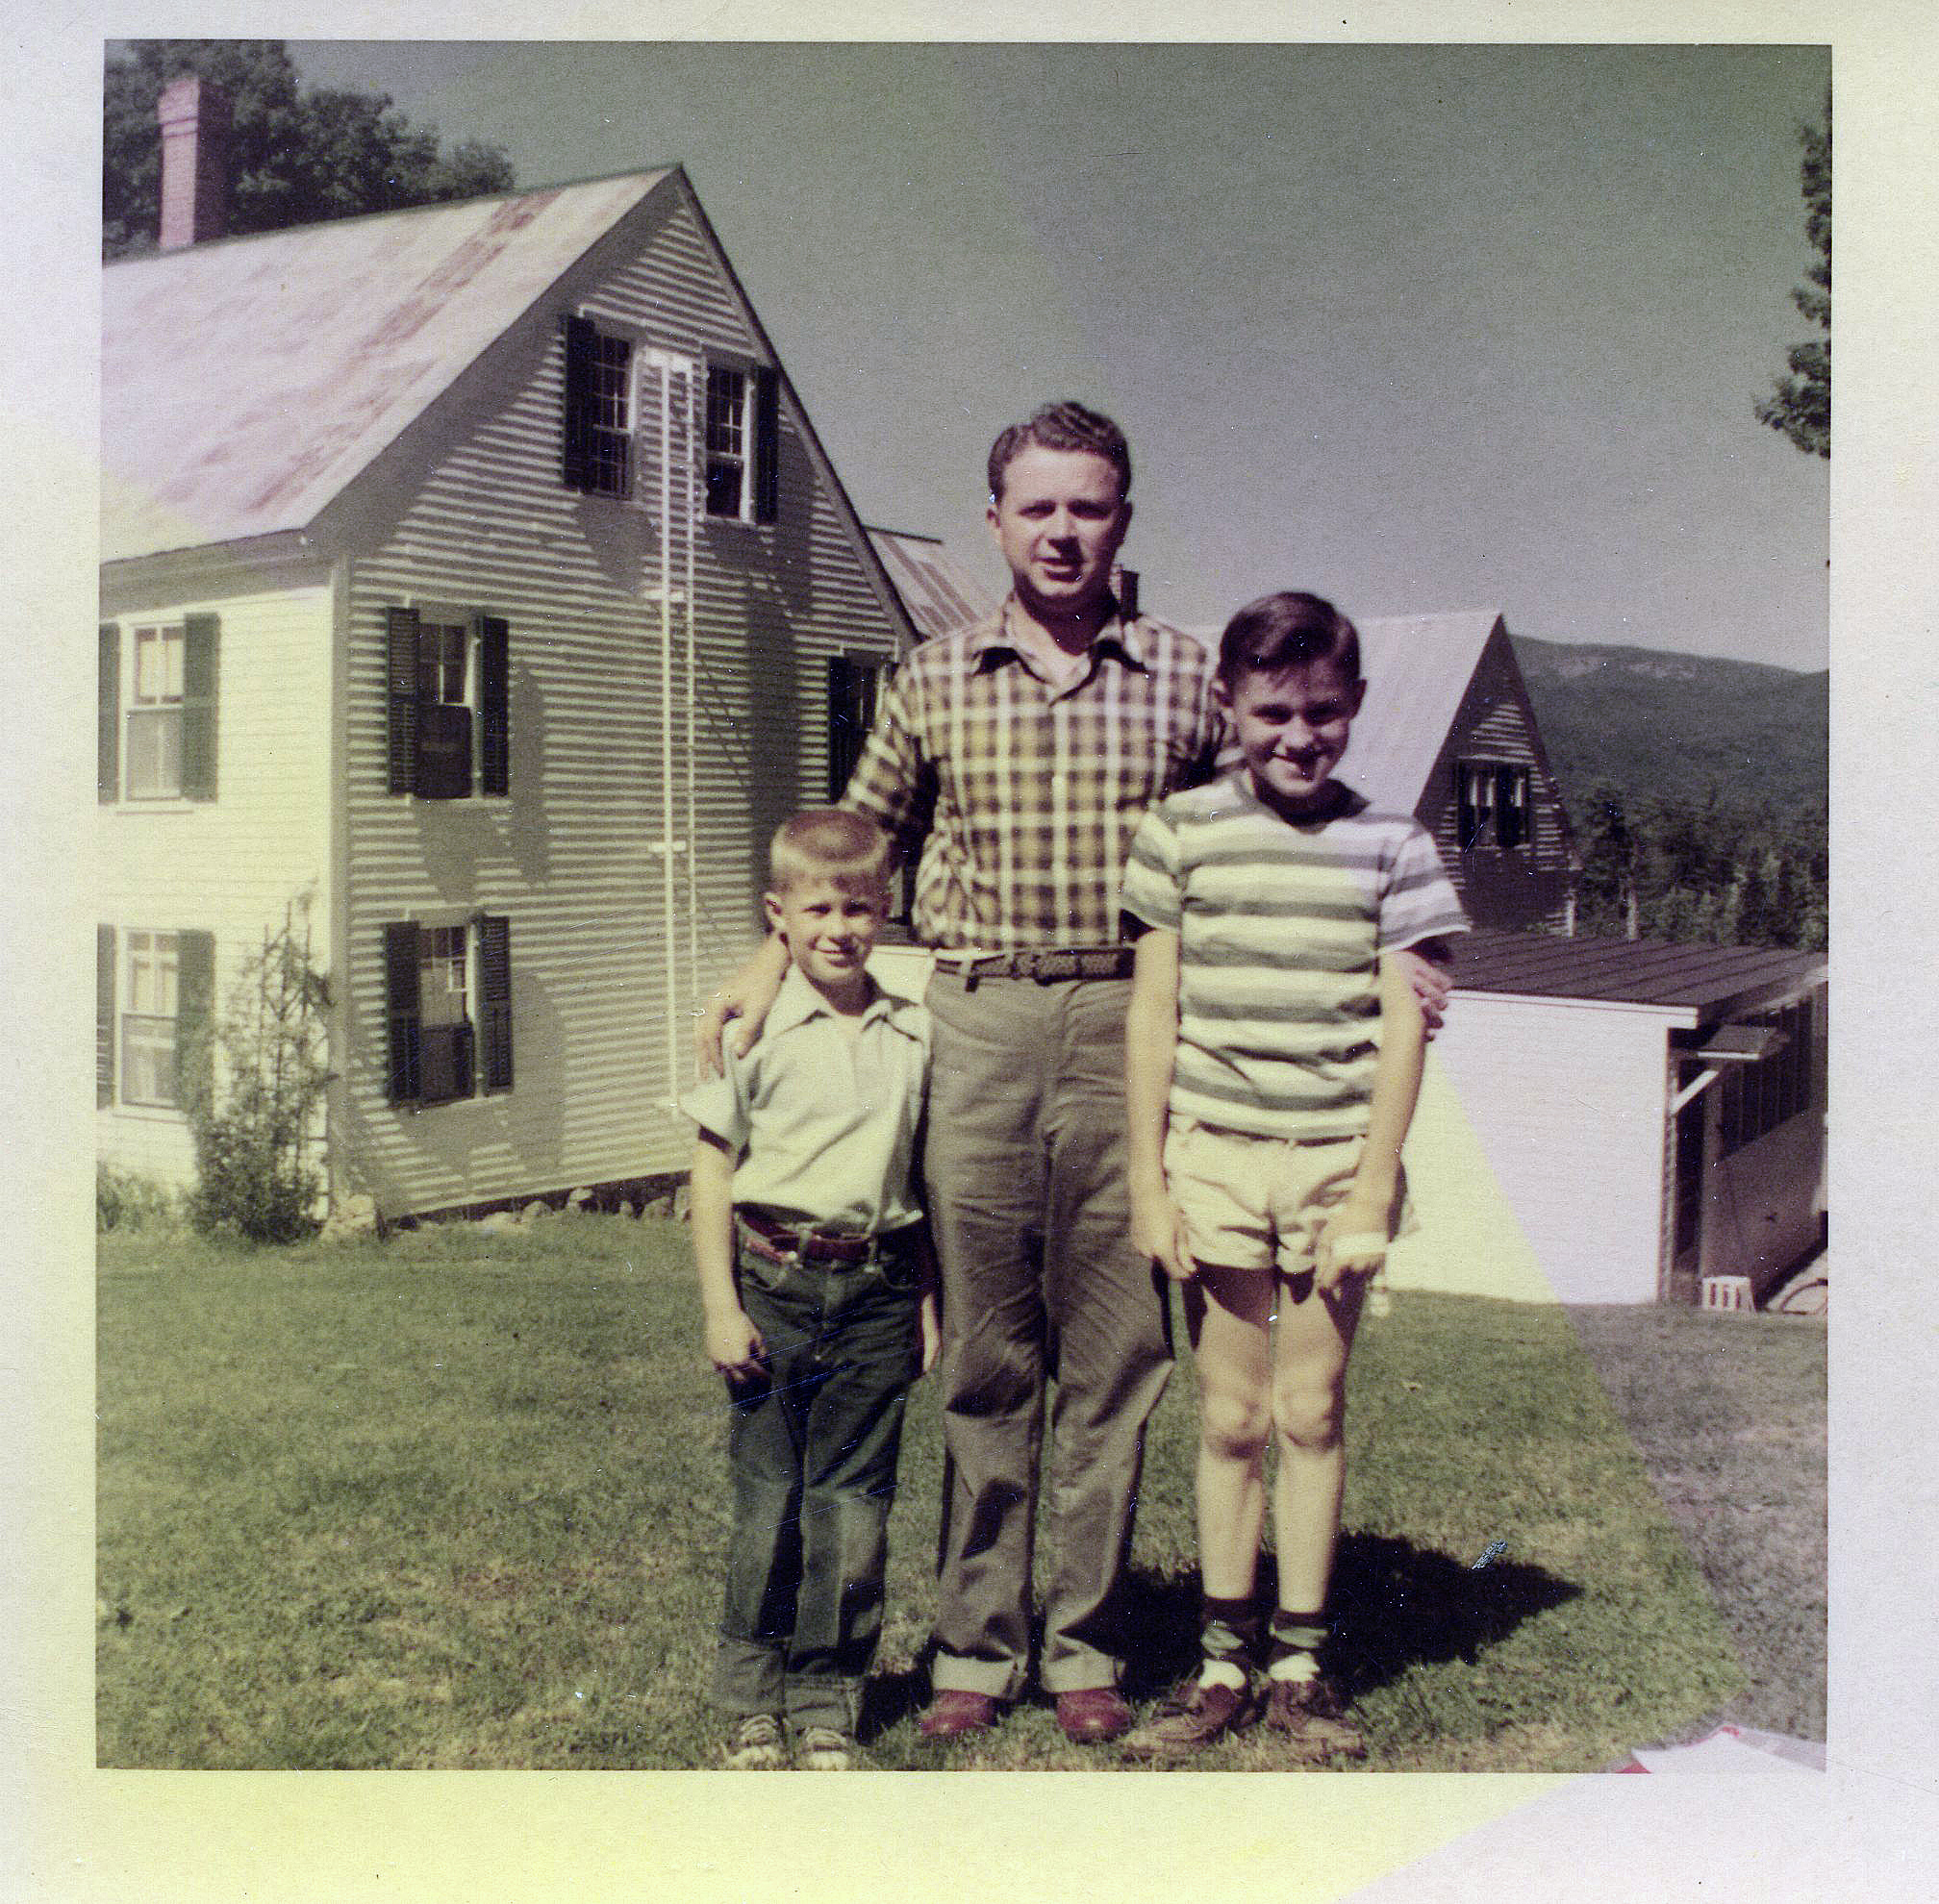 Historical Jackson NH Inn Photo from July, 1954